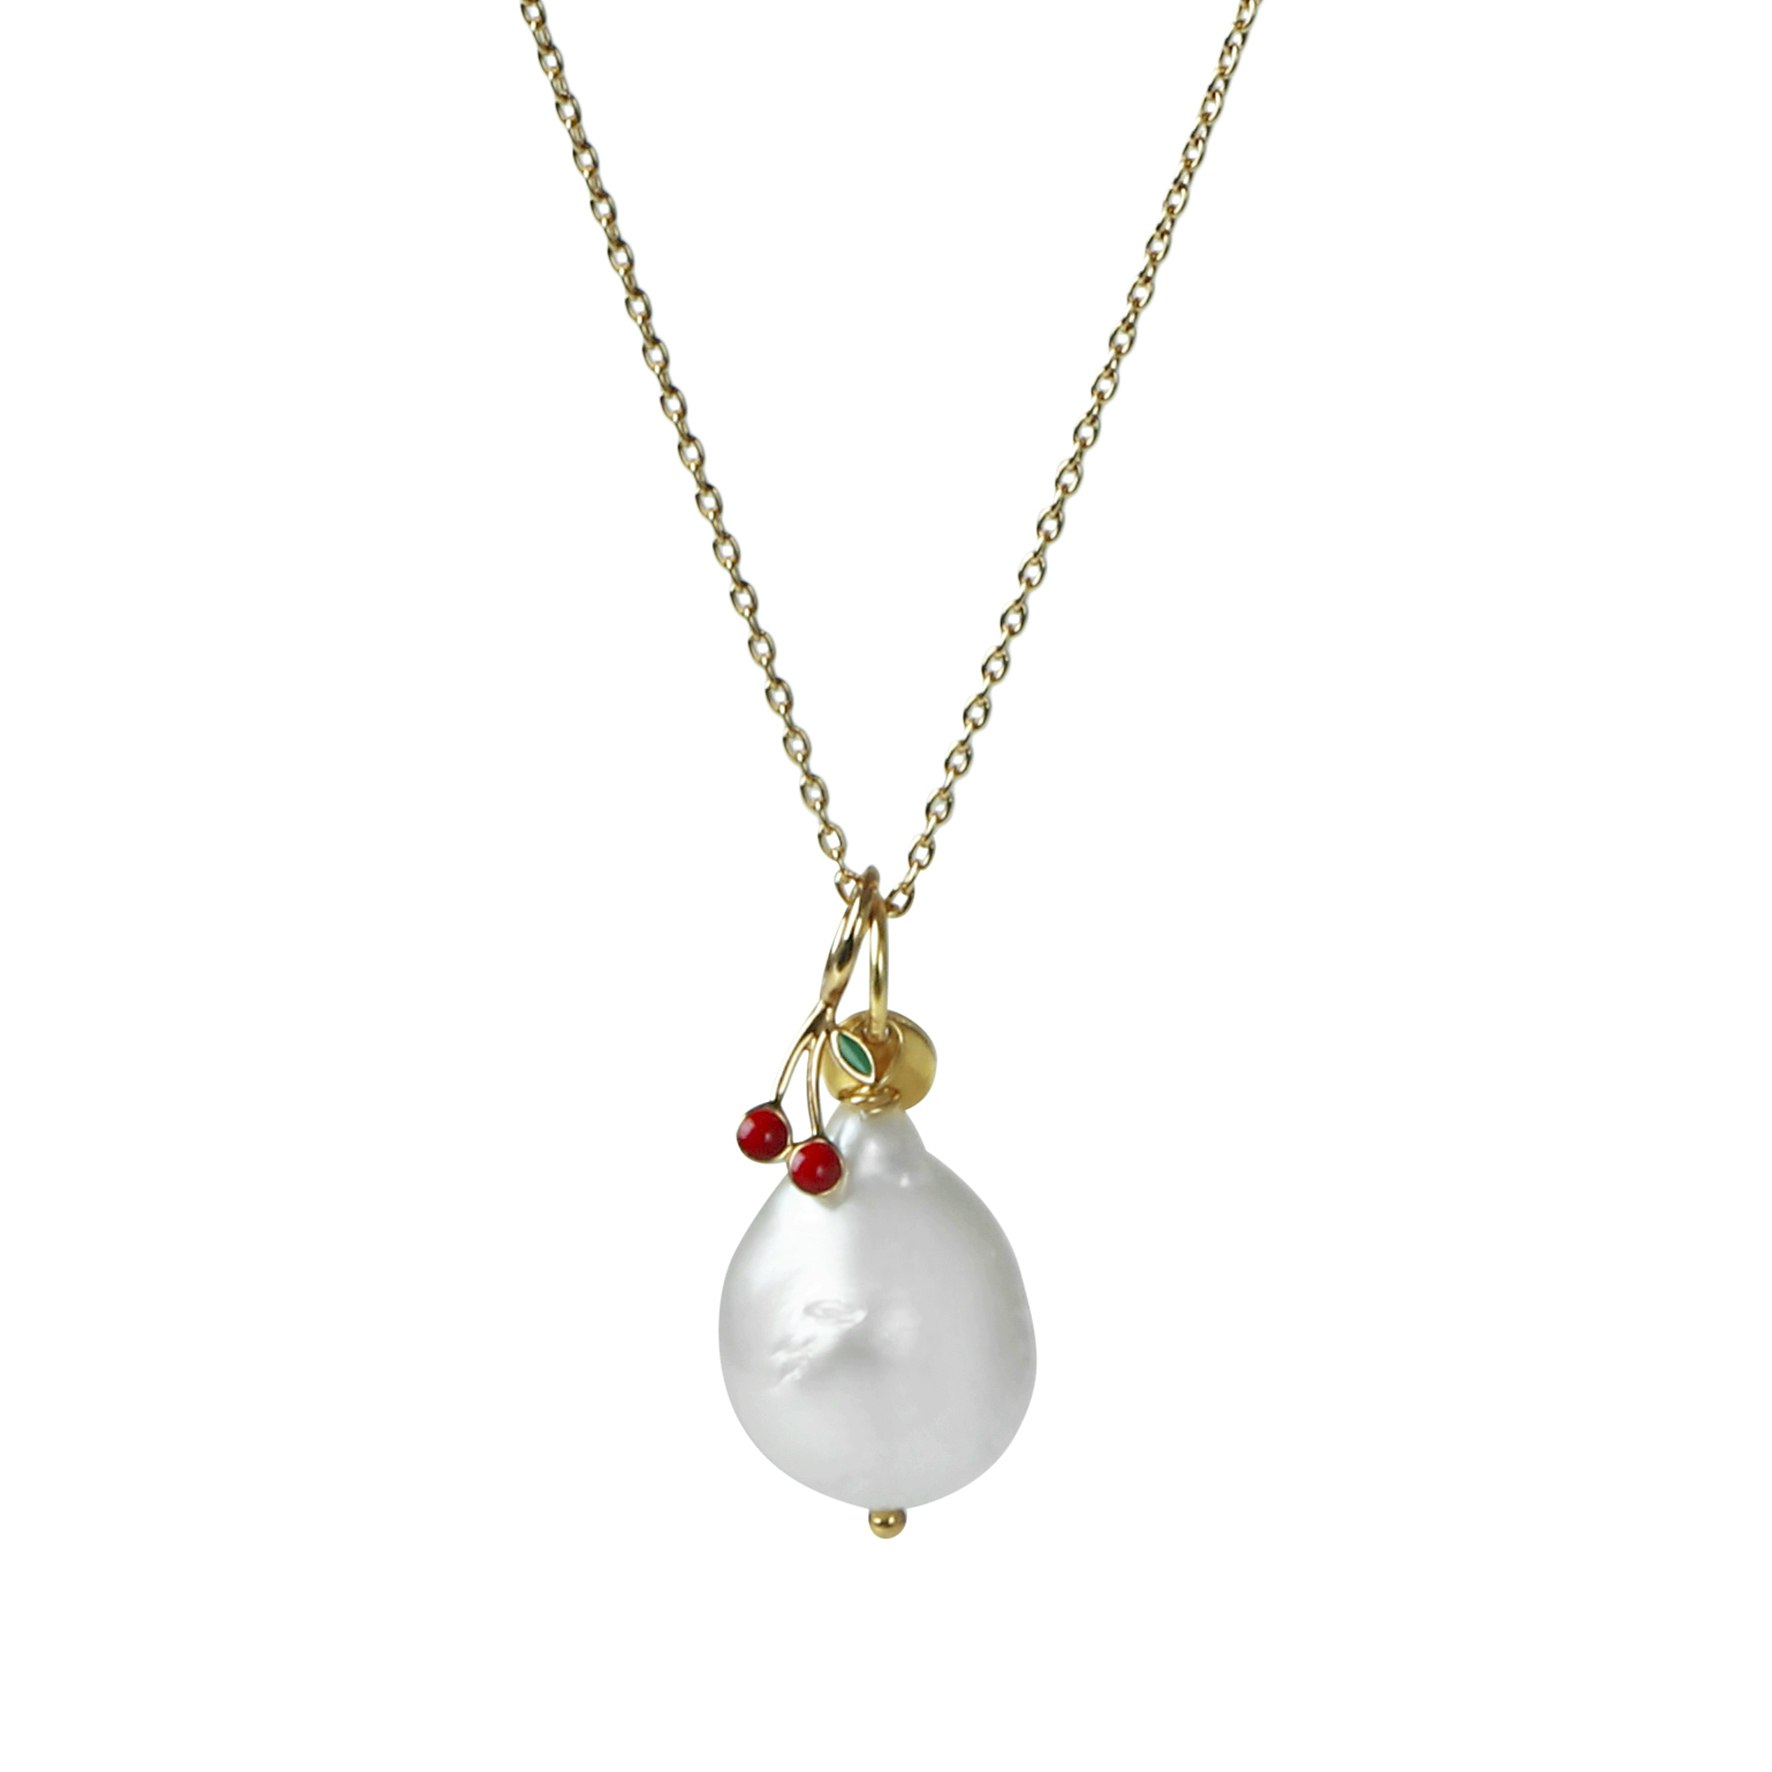 Baroque Pearl Pendant von STINE A Jewelry in Vergoldet-Silber Sterling 925